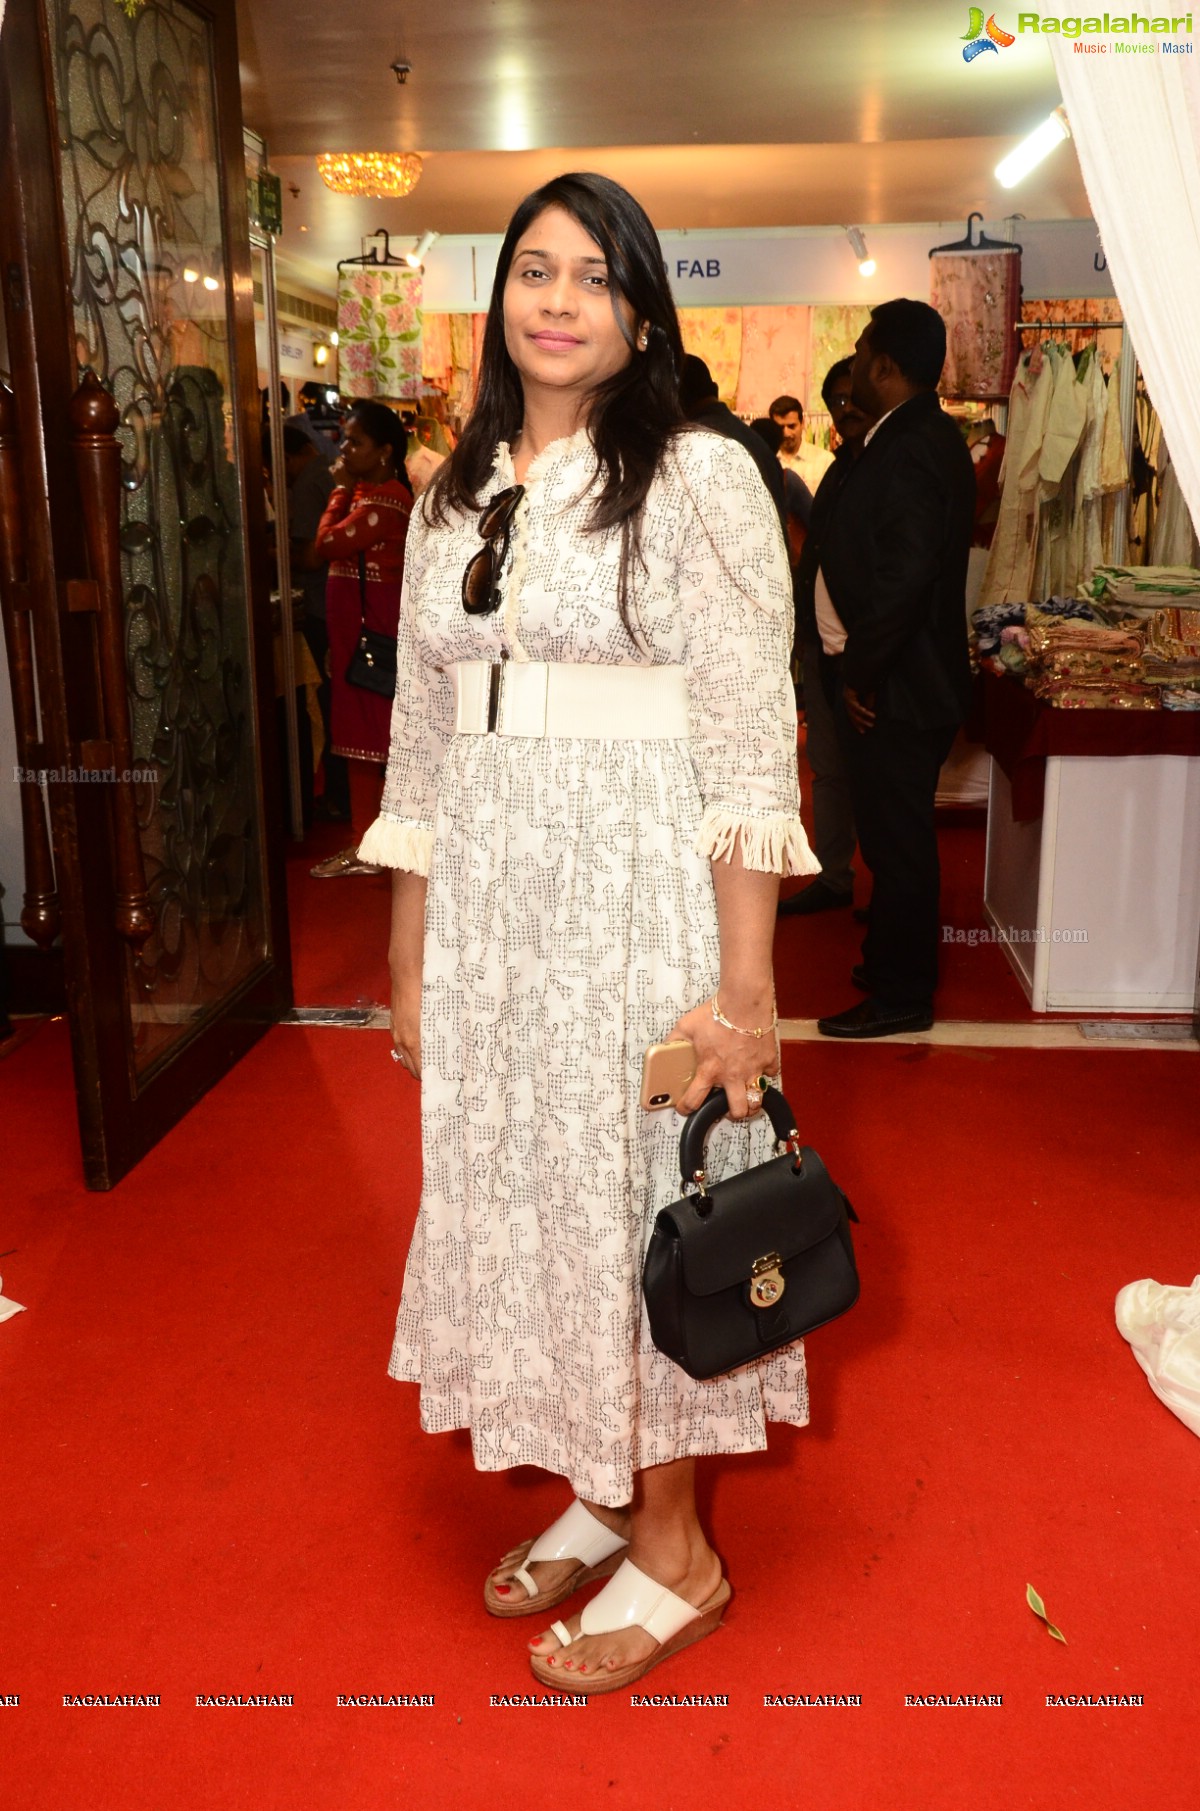 Rufflez Expo Launch By Bollywood Actress Jaspreet Kaur Pruthi at Taj Krishna, Banjara Hills